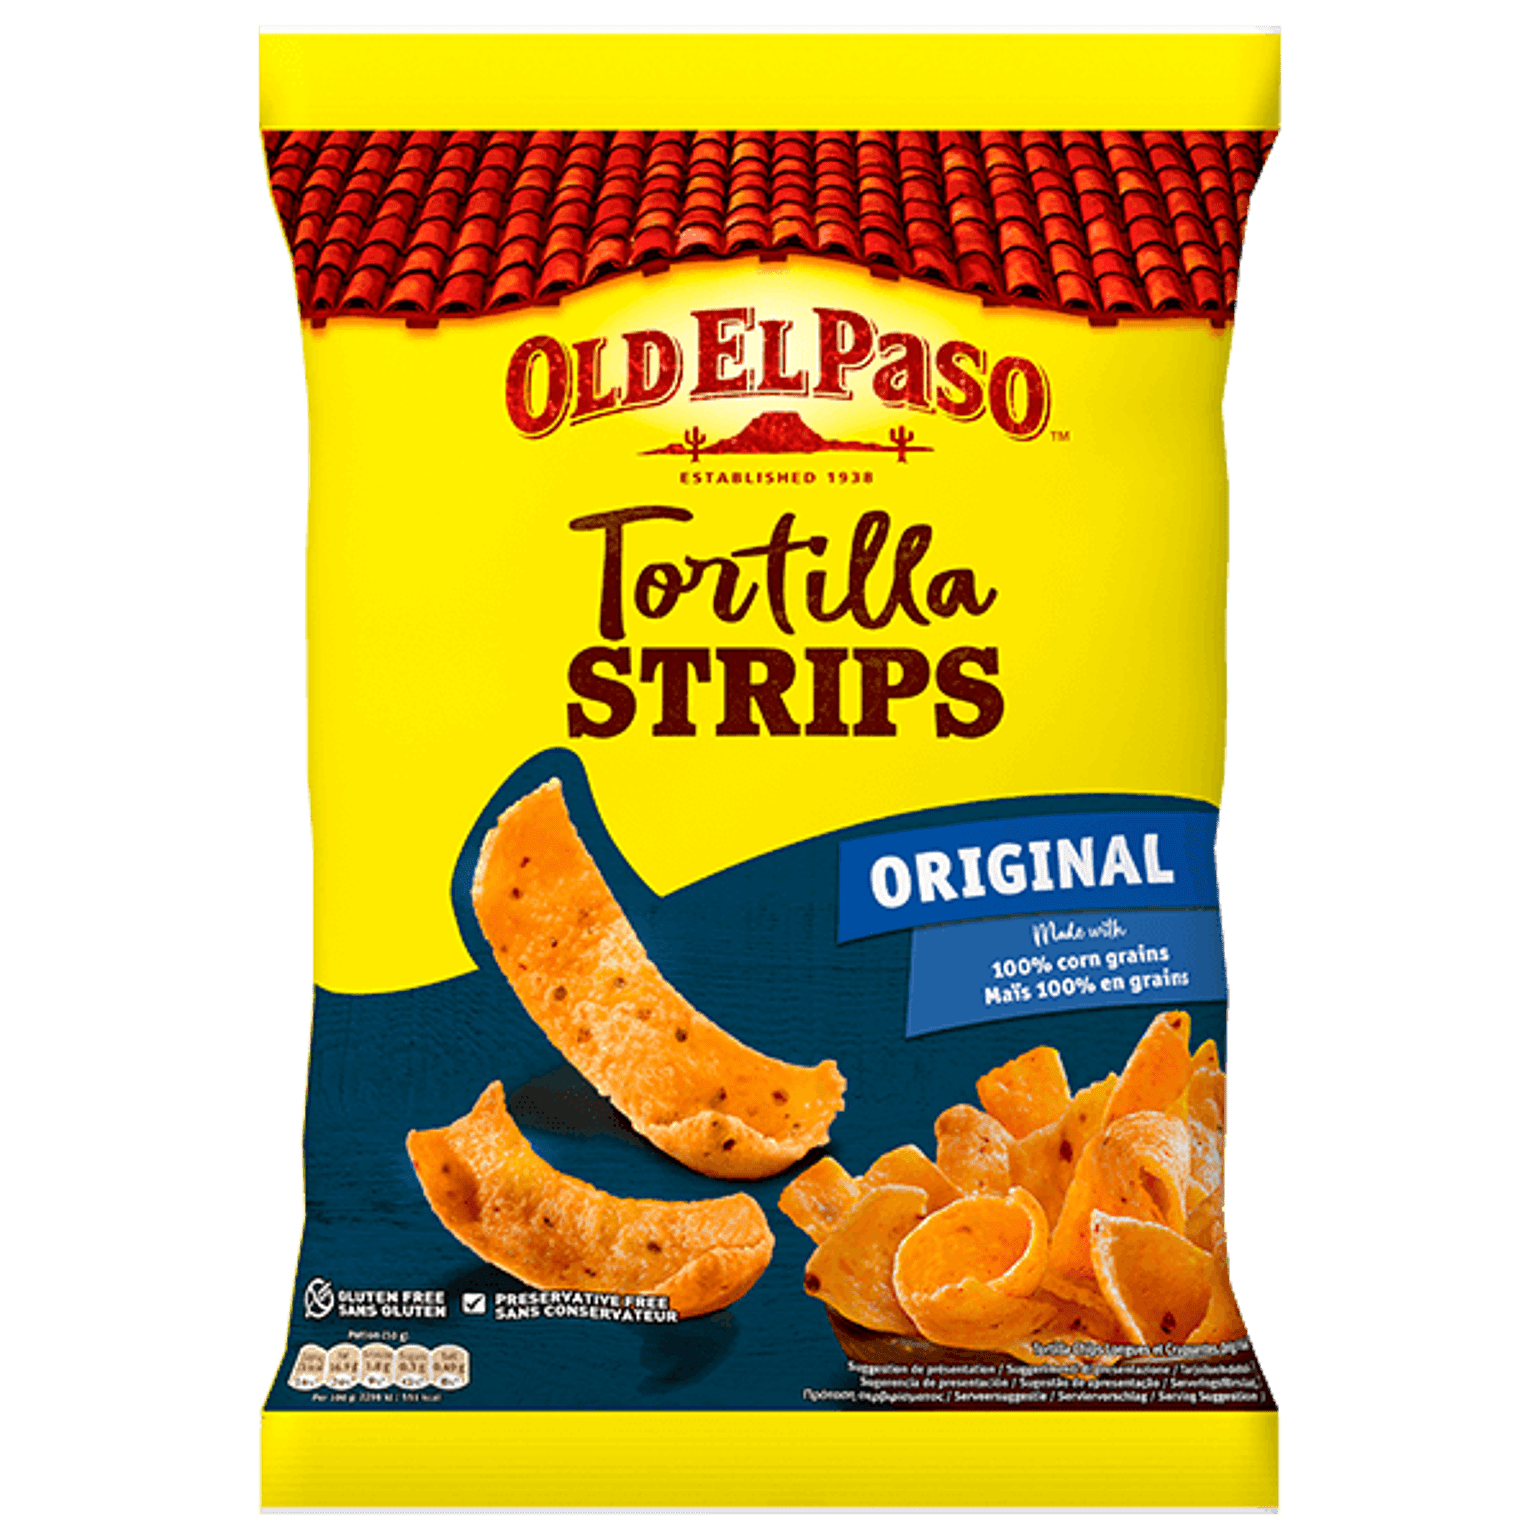 pack of Old El Paso's original tortilla strips